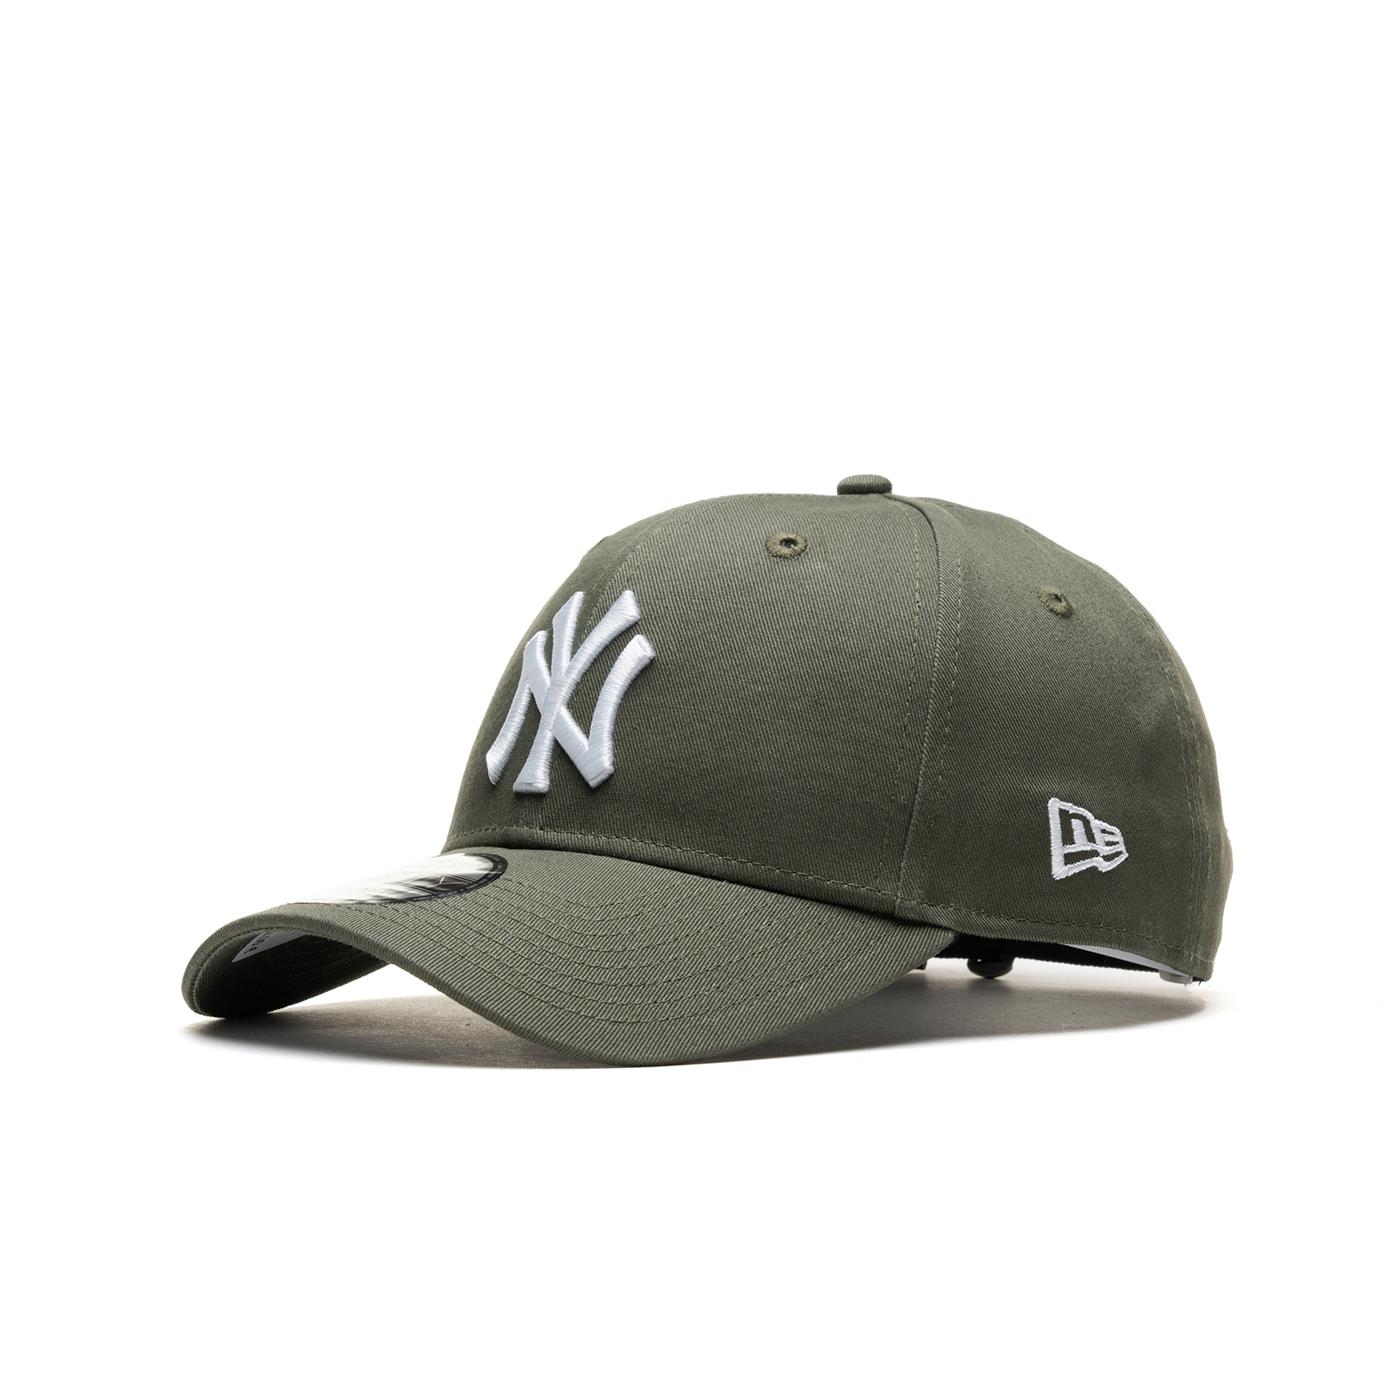 NY Yankees New Era 940 League Essential Olive Green Baseball Cap